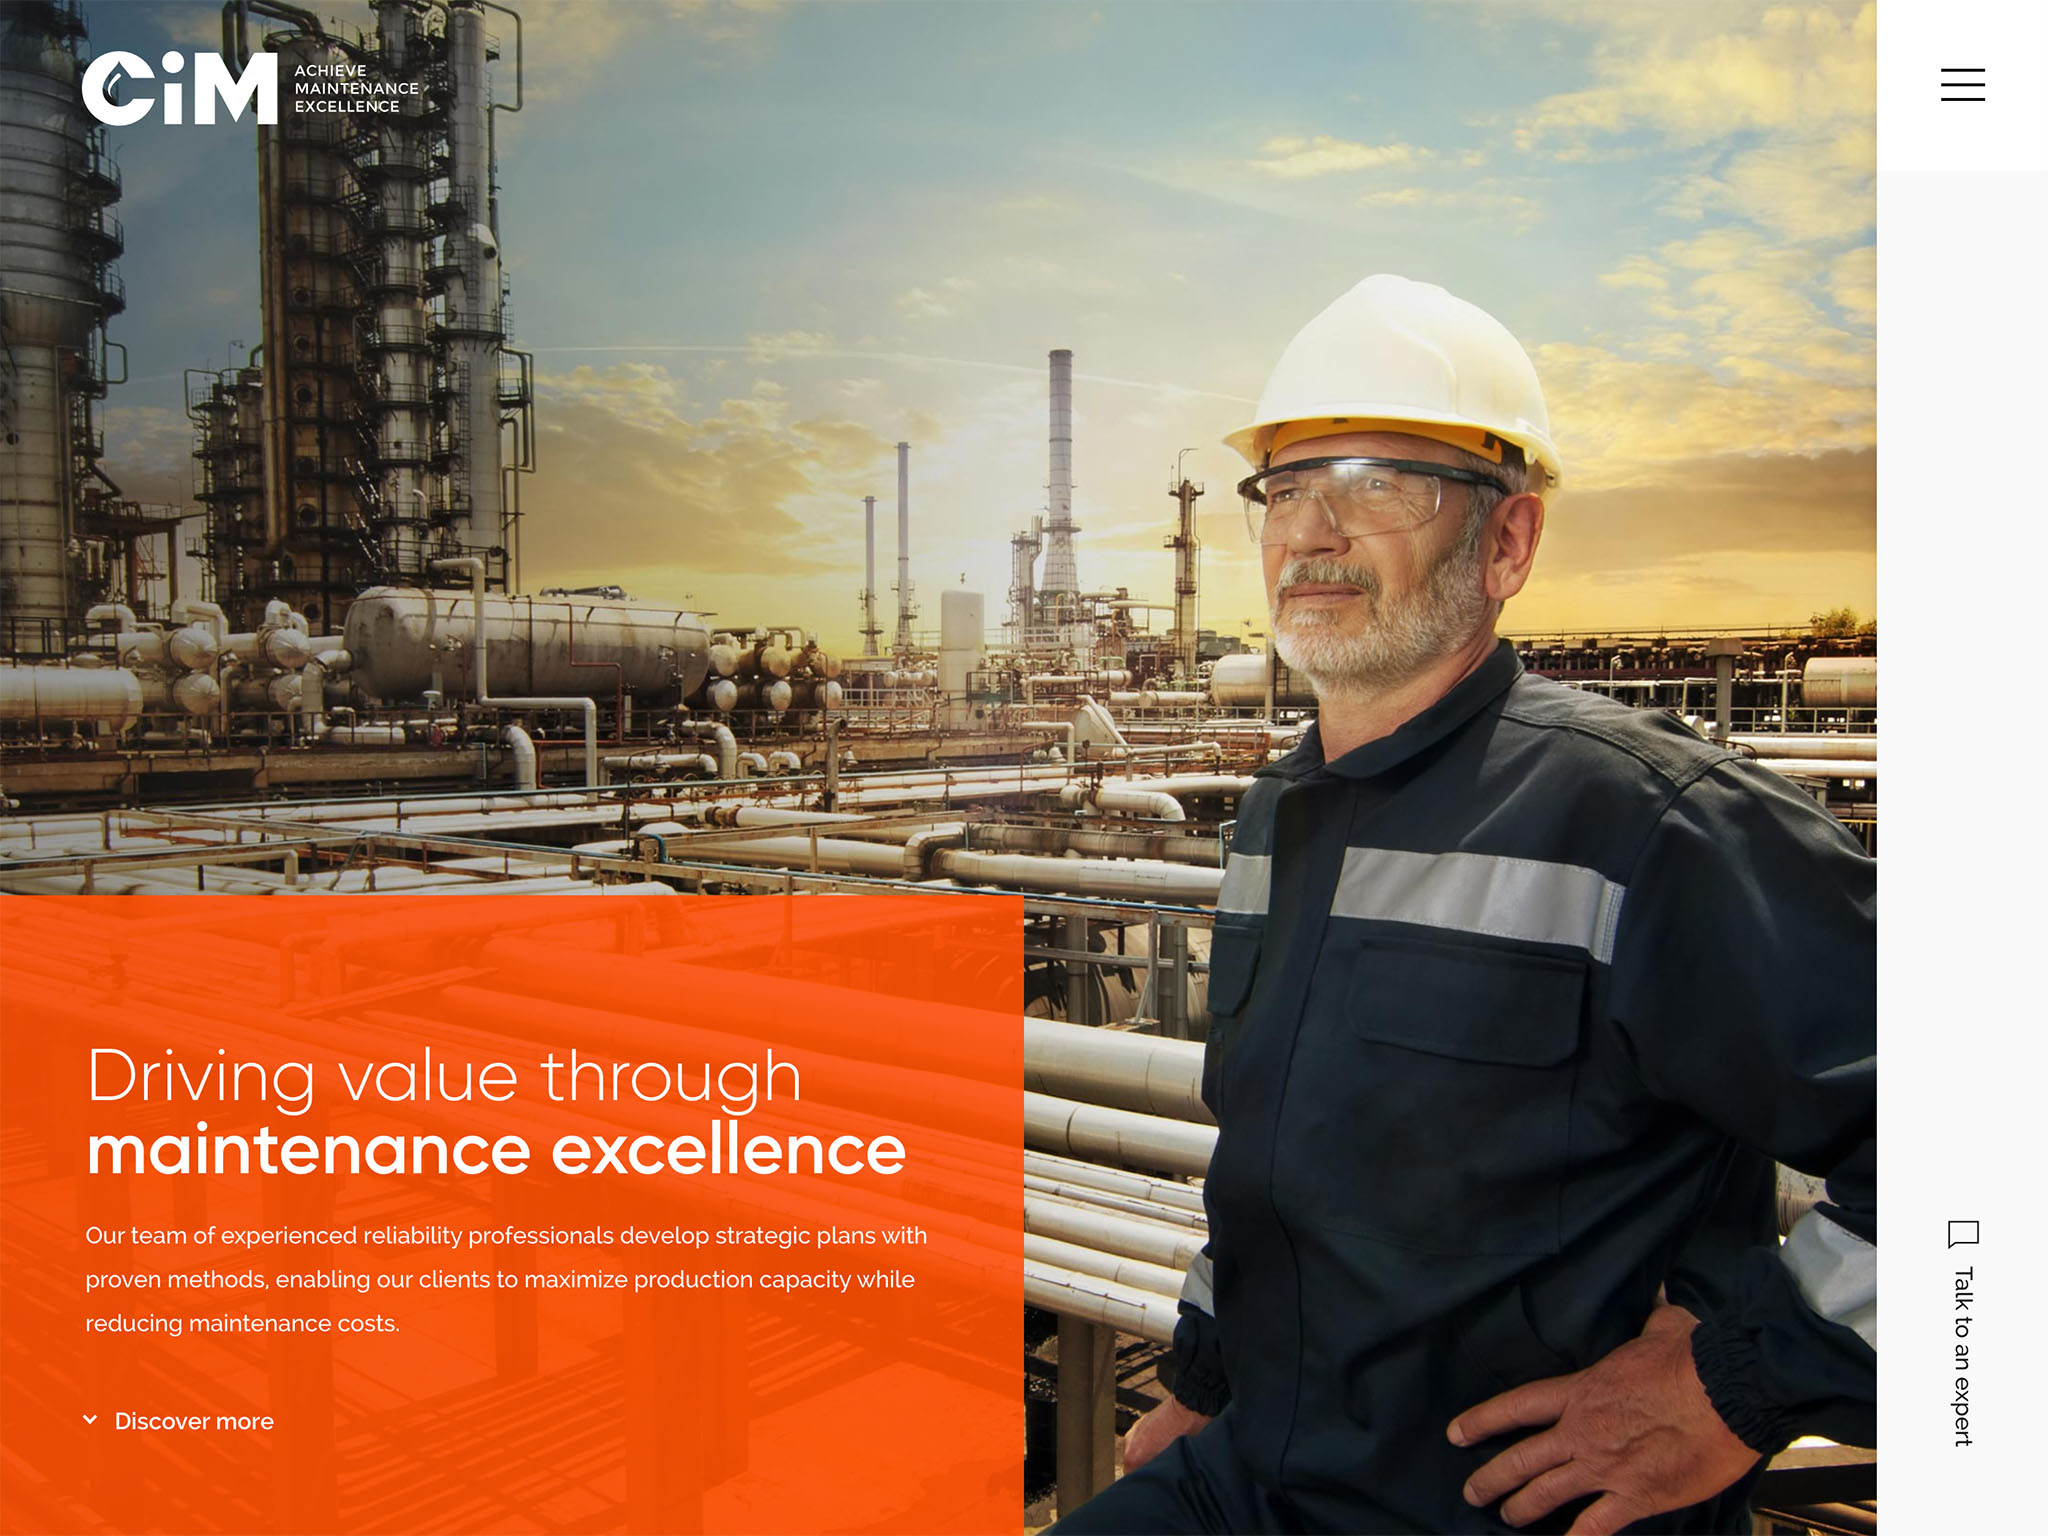 CiM Maintenance | Driving value through maintenance excellence